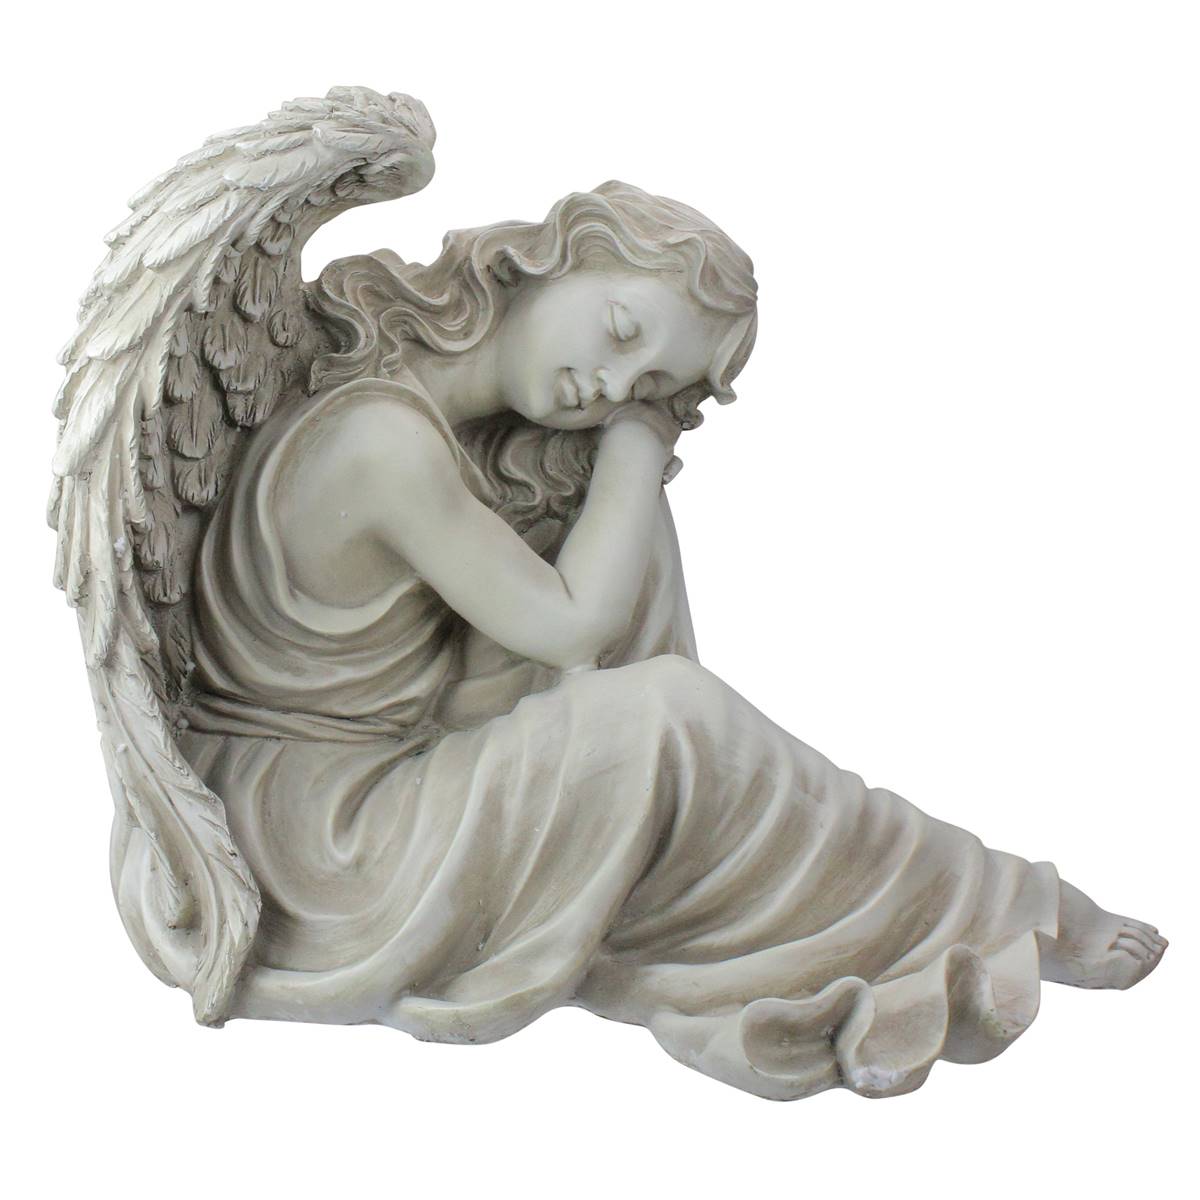 Northlight Seasonal 19in. Peaceful Resting Angel Garden Statue